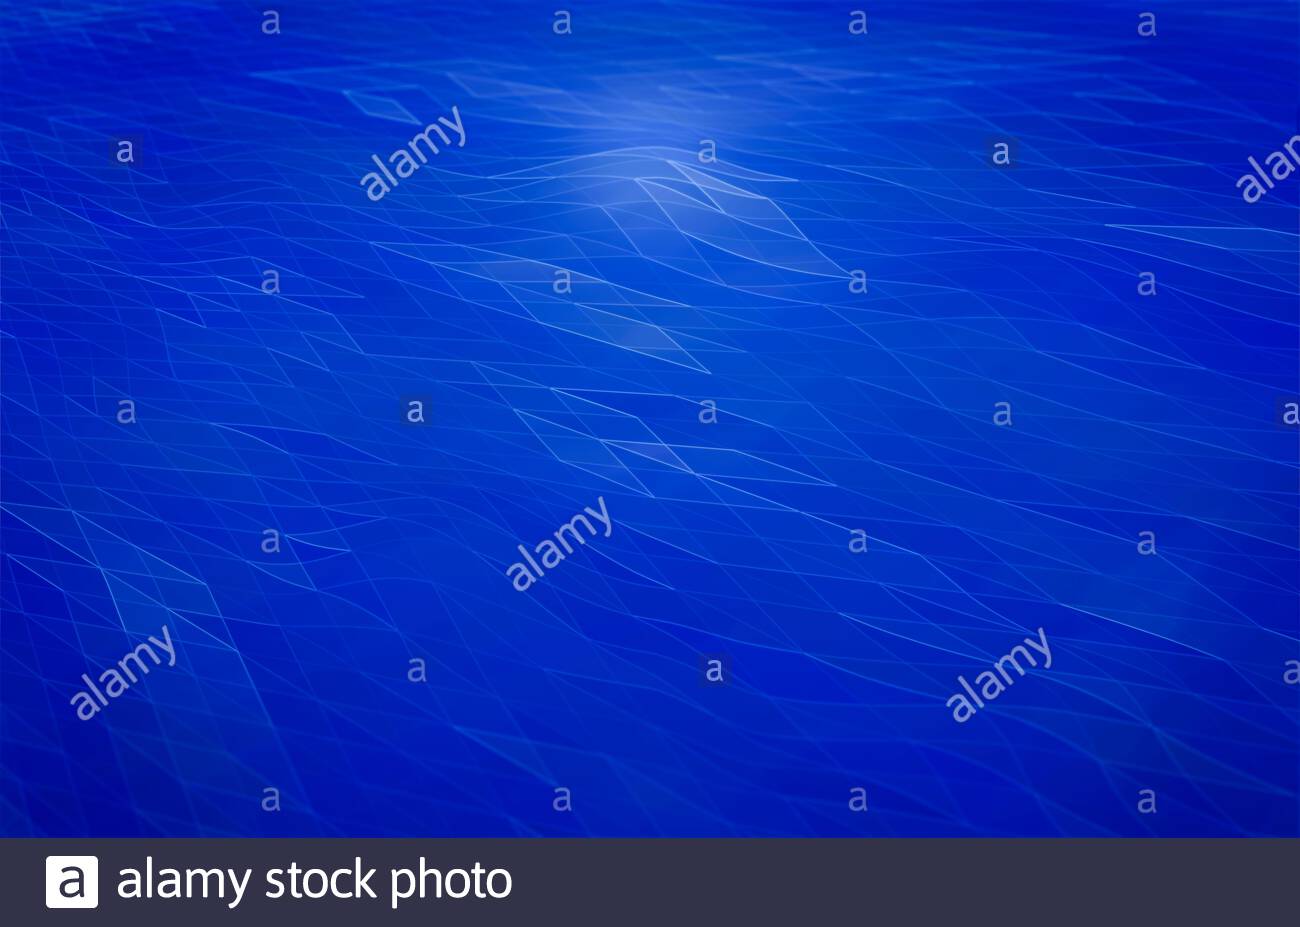 Wavy Blue Triangular Shape 3d Background With Tilt Shift Effect